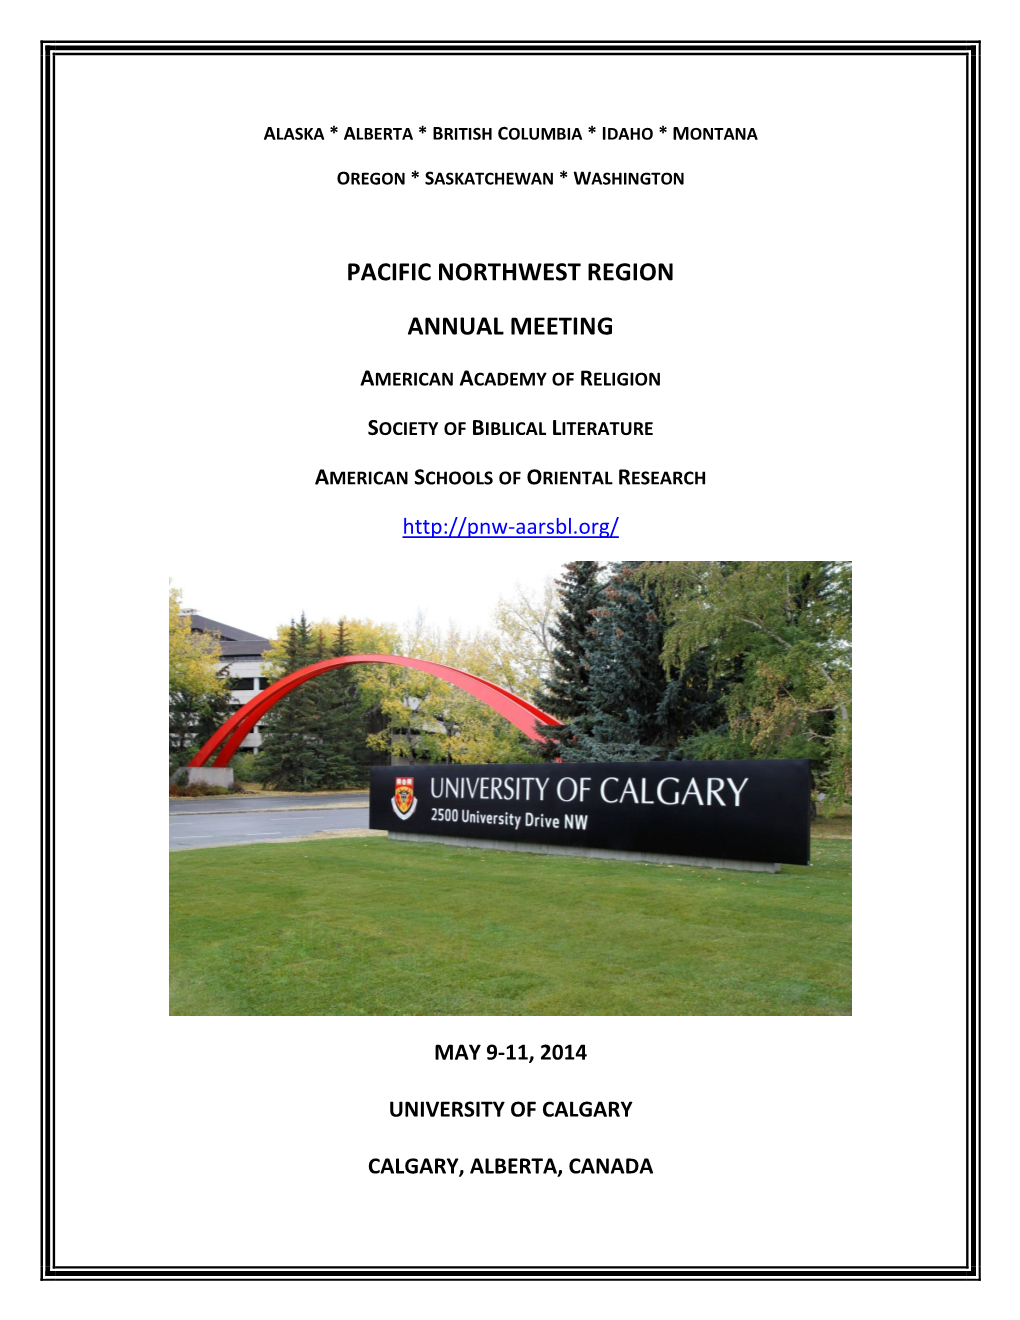 University of Calgary Program